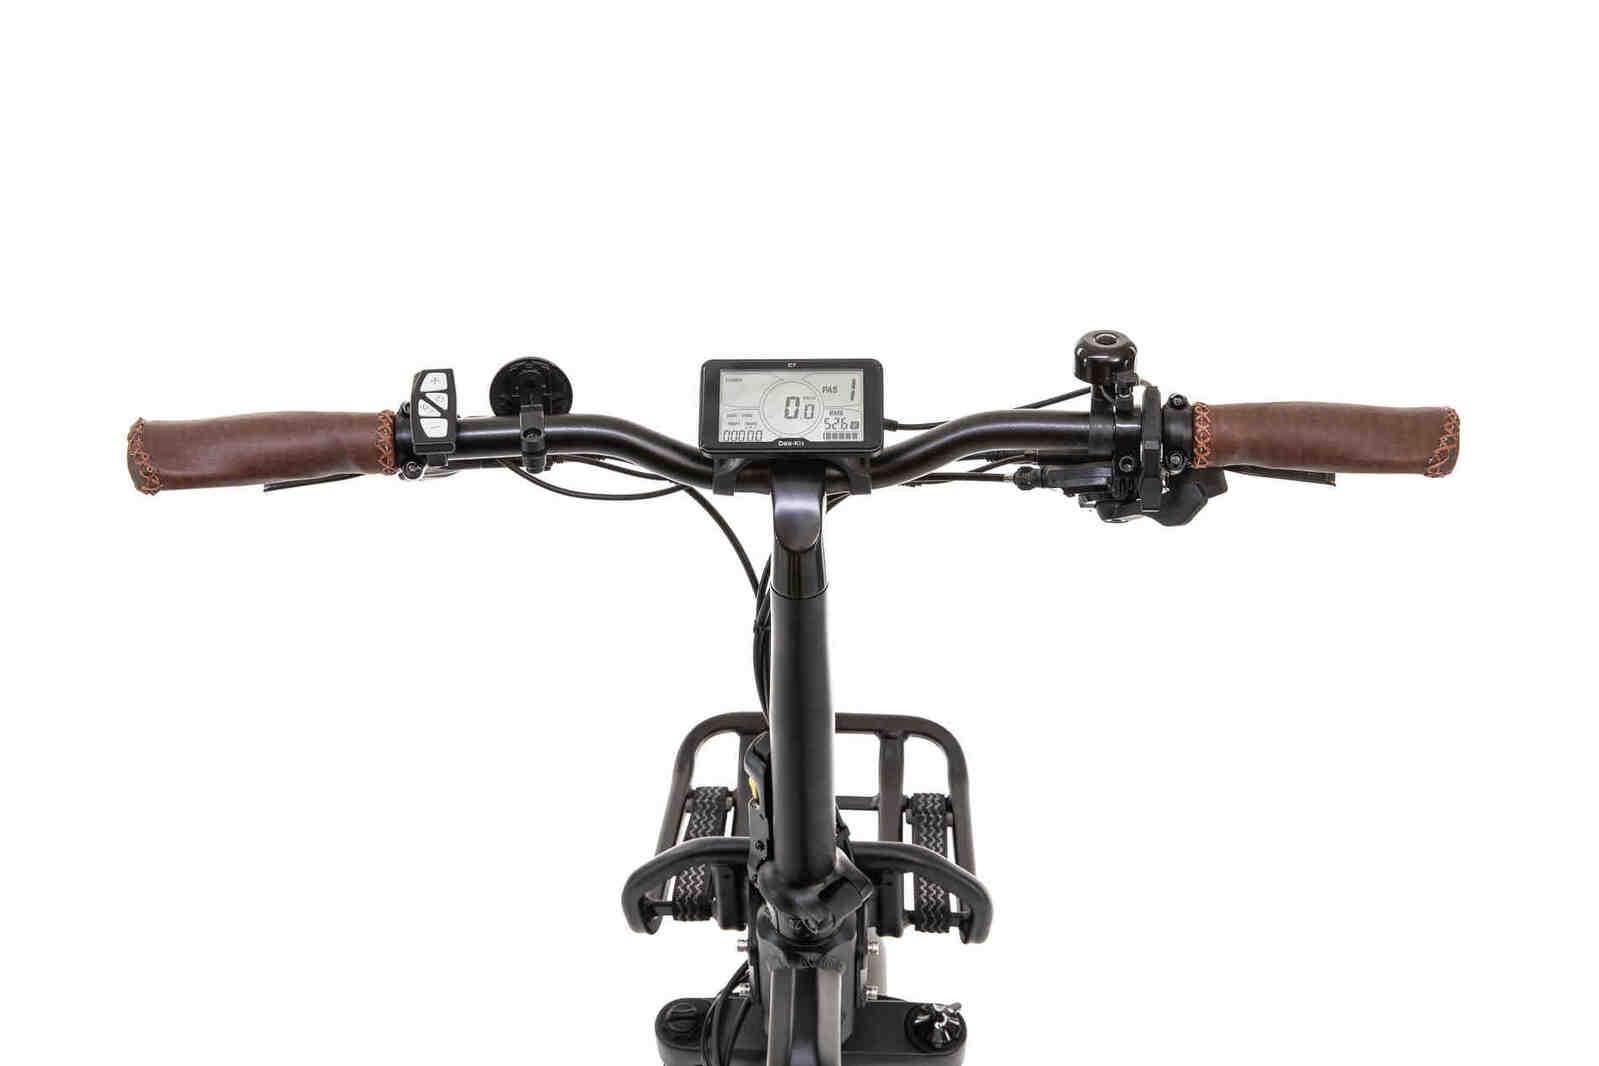 ET-Cycle F1000 Folding E-Bike, 250W, 48V 21Ah | Leon Cycle Ebikes